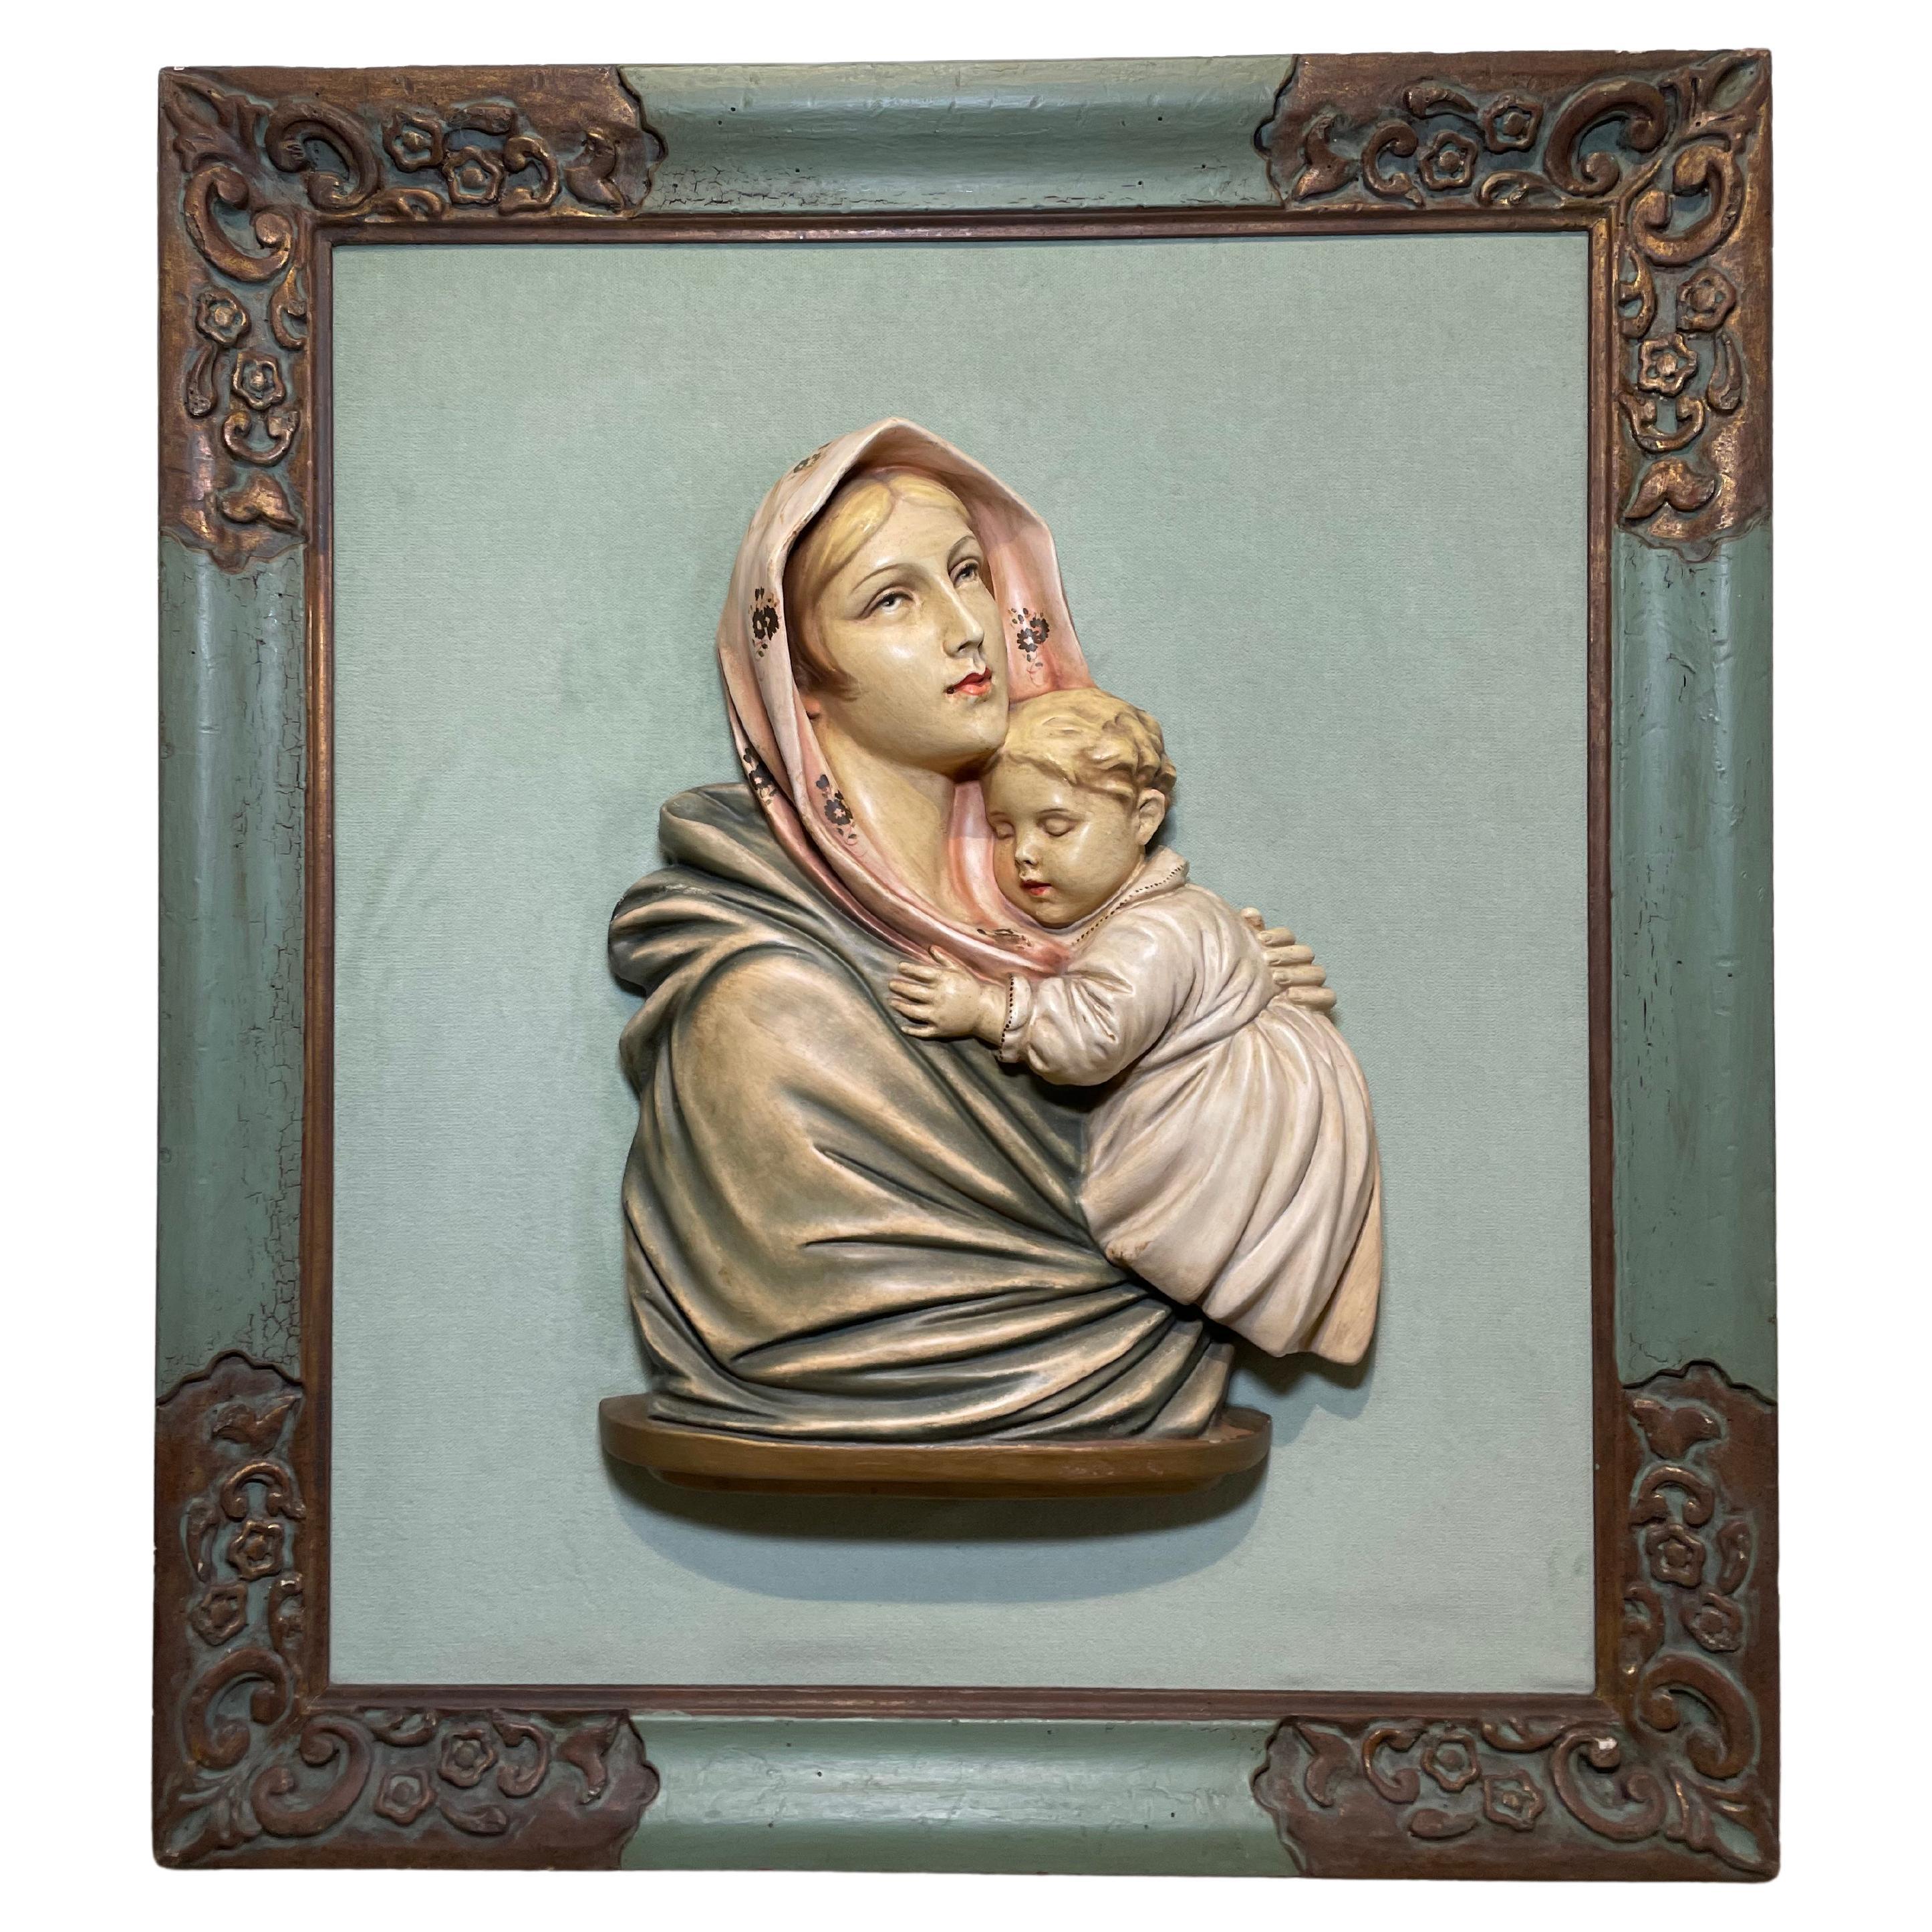 Keramik-Skulptur/Reliefrahmen der Jungfrau Maria und des Baby Jesus